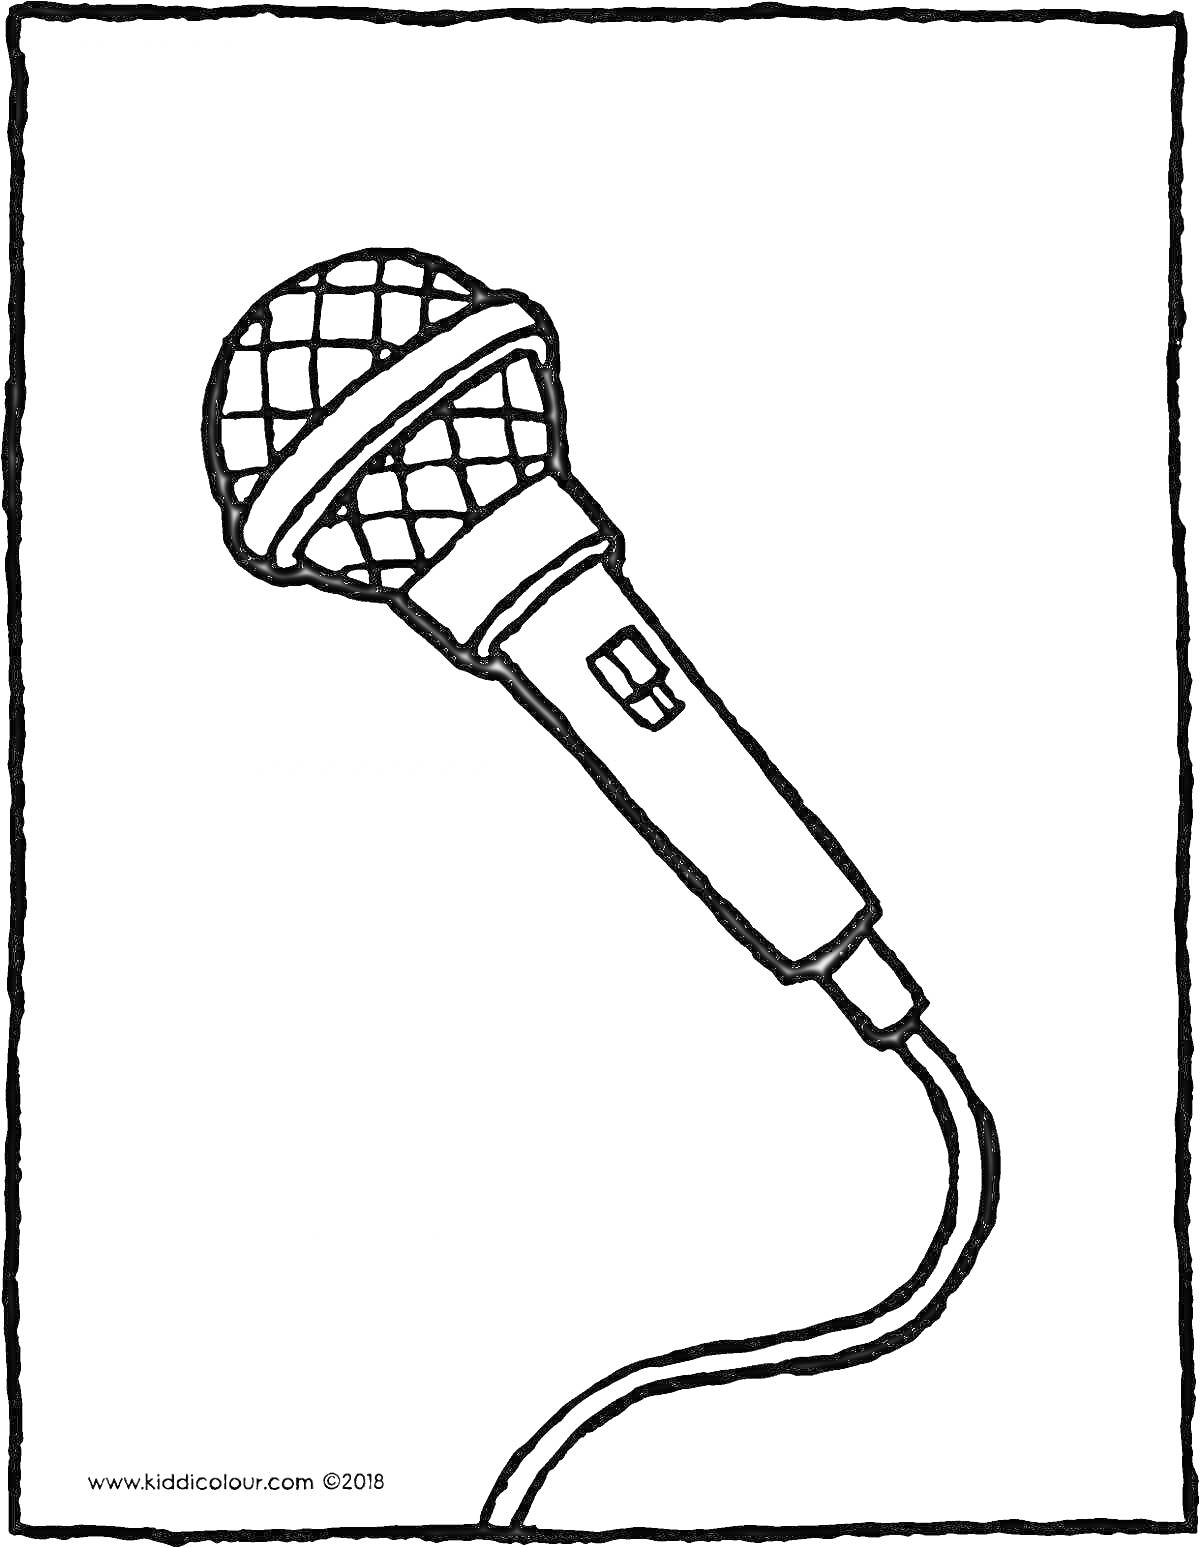 Раскраска Микрофон с проводом на фоне с рамкой